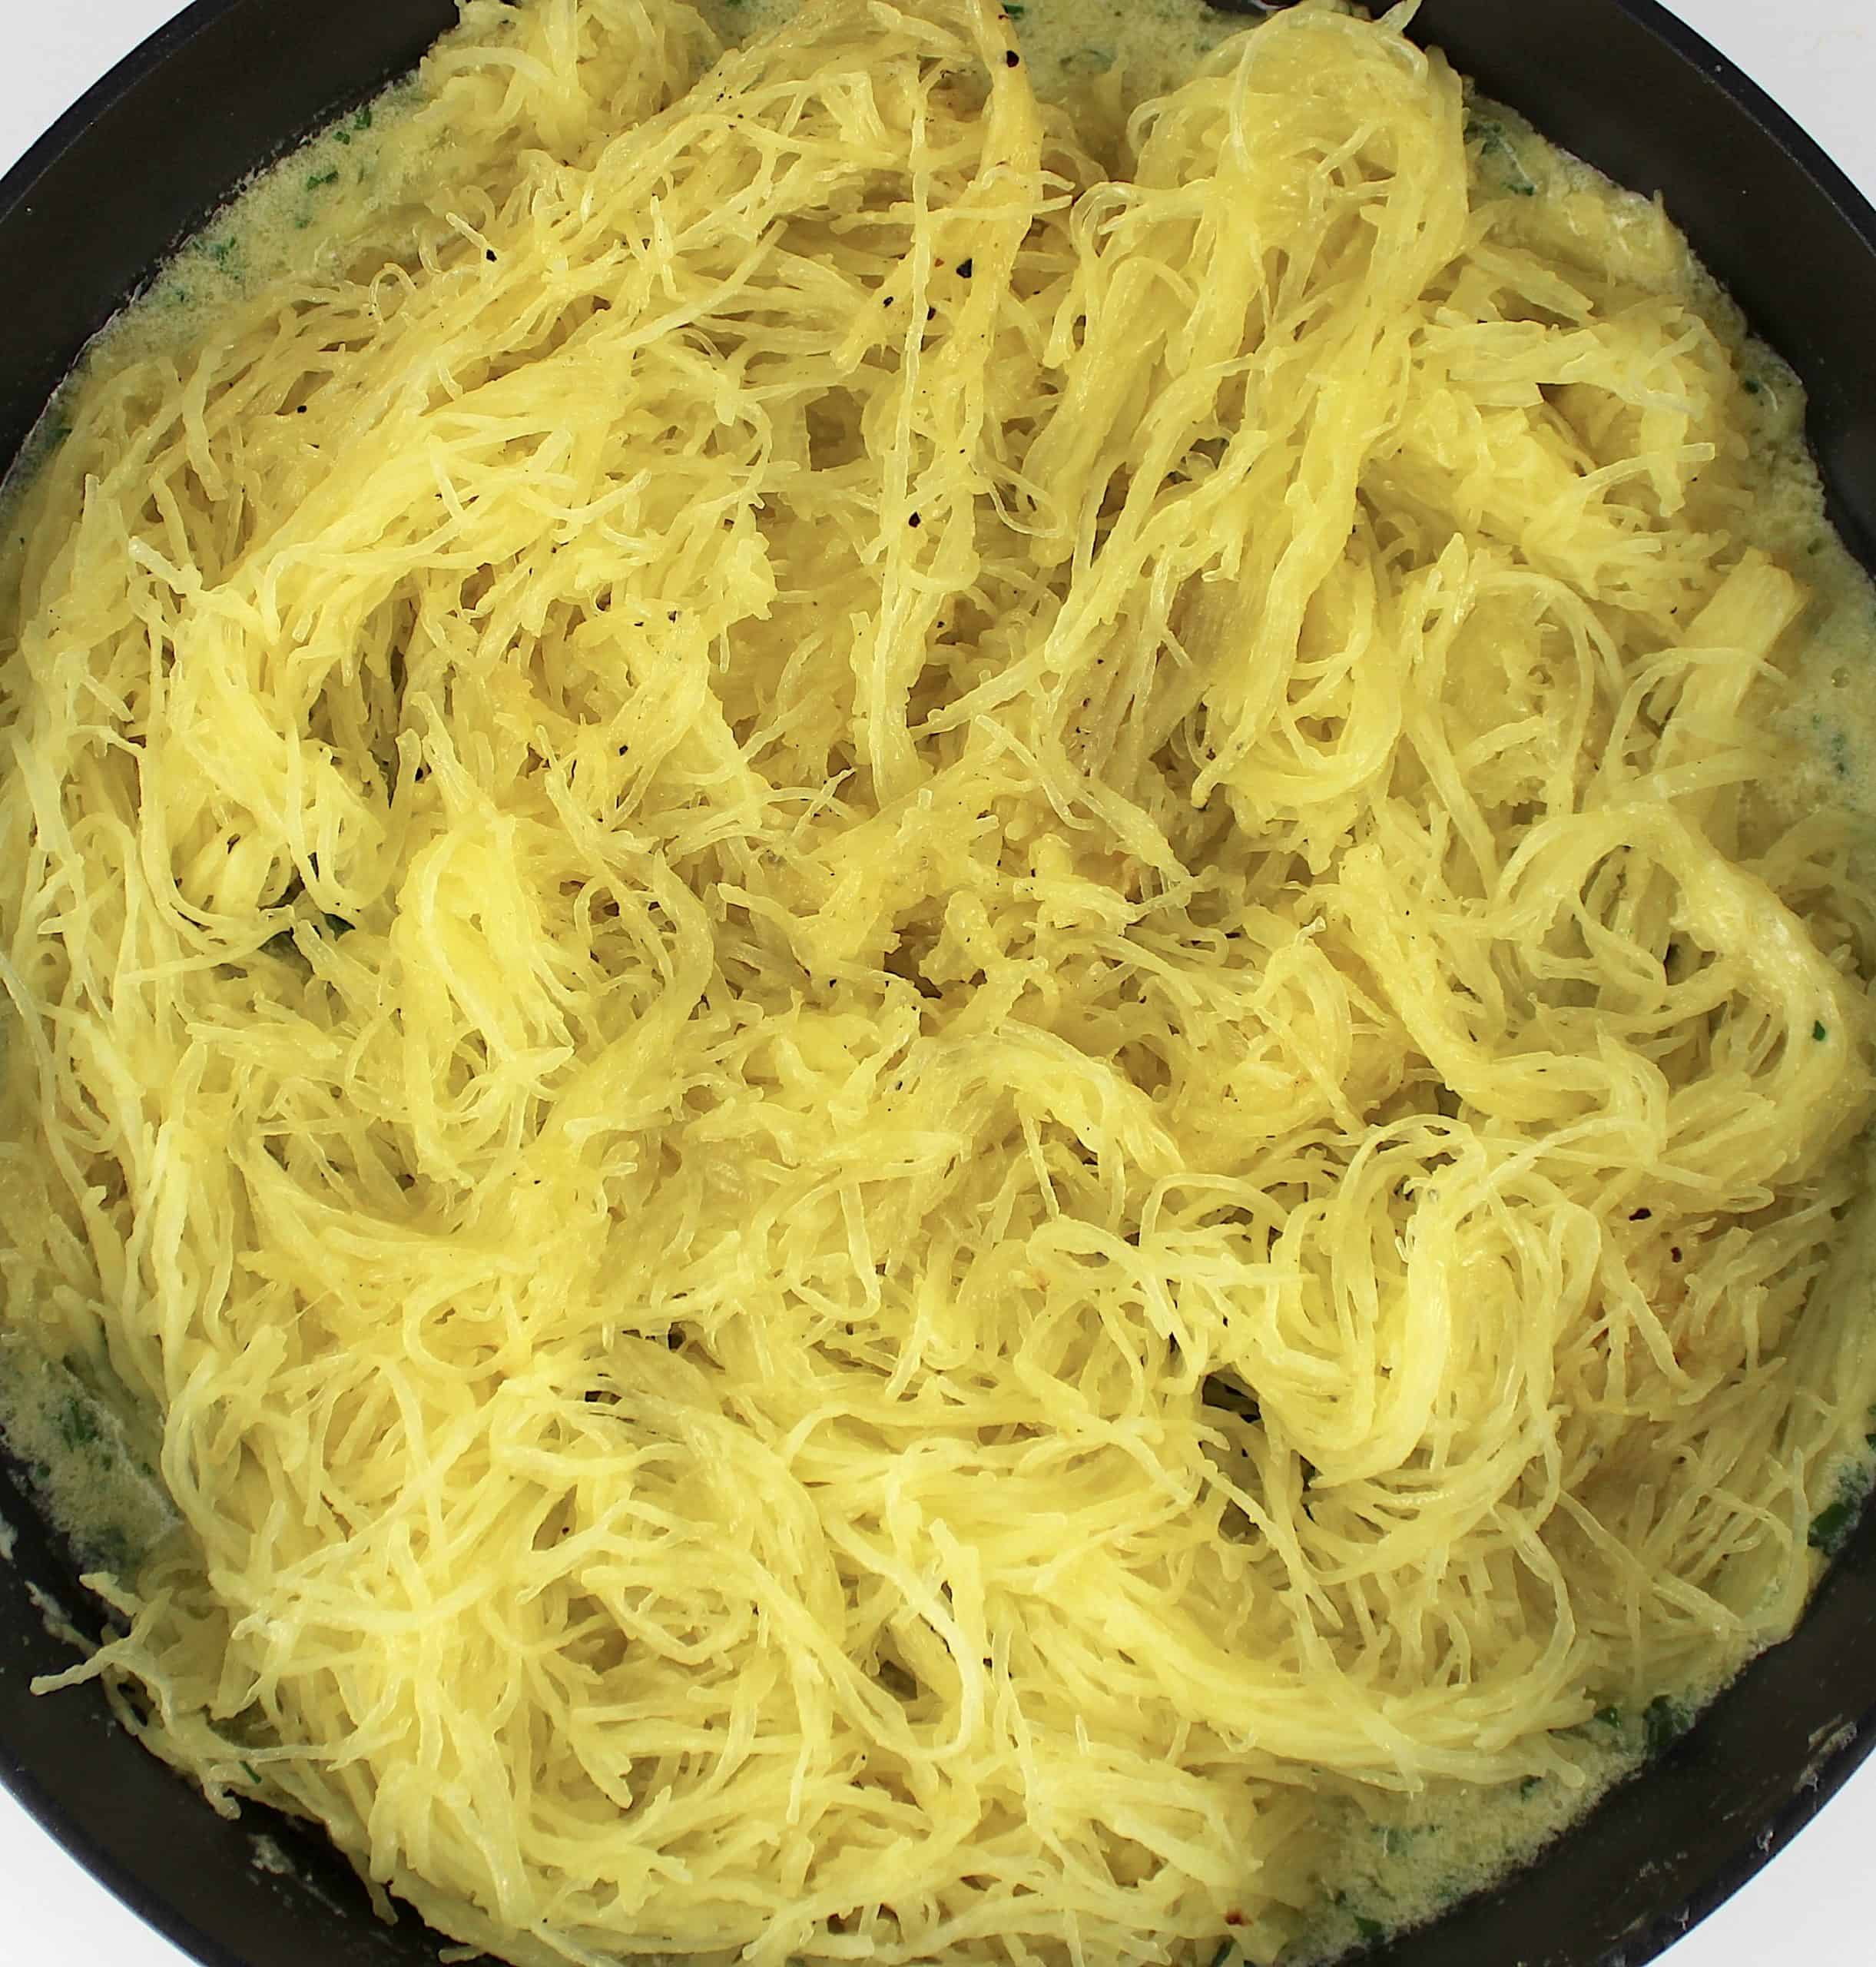 spaghetti squash in butter sauce in skillet